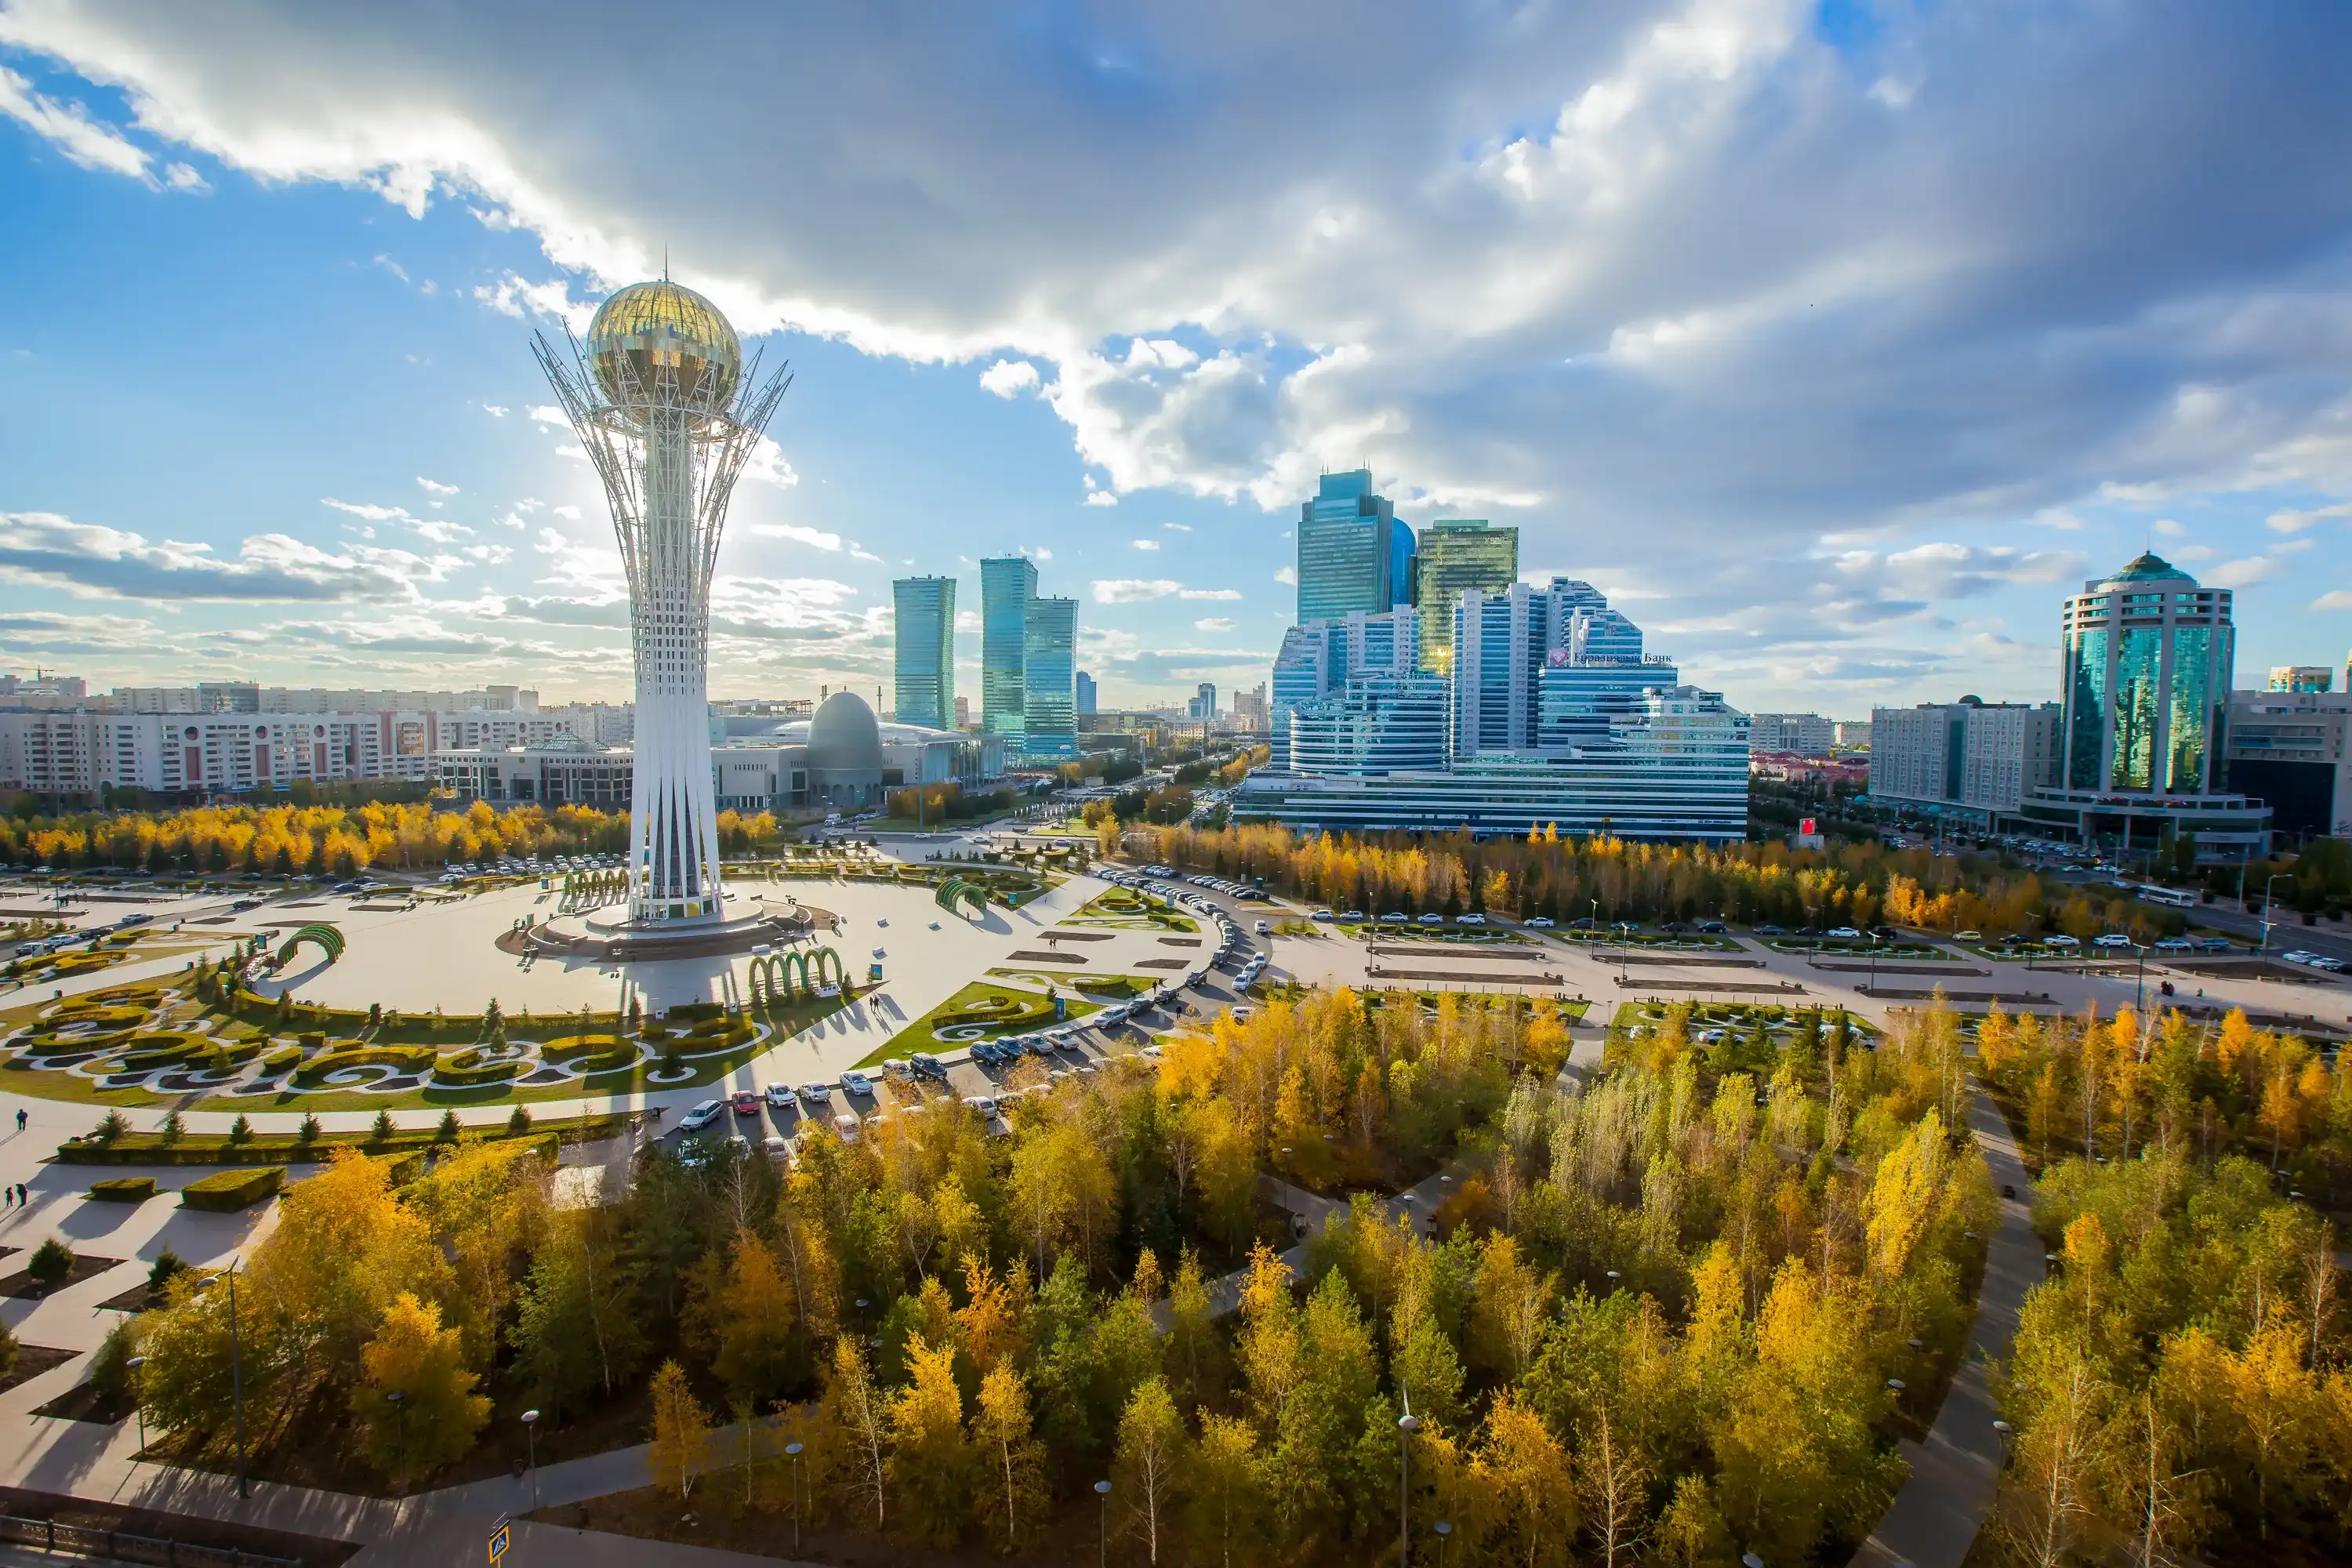 Astana, Nur-Sultan, Kazakhstan. Center of the city, skyscraper, view on Baiterek